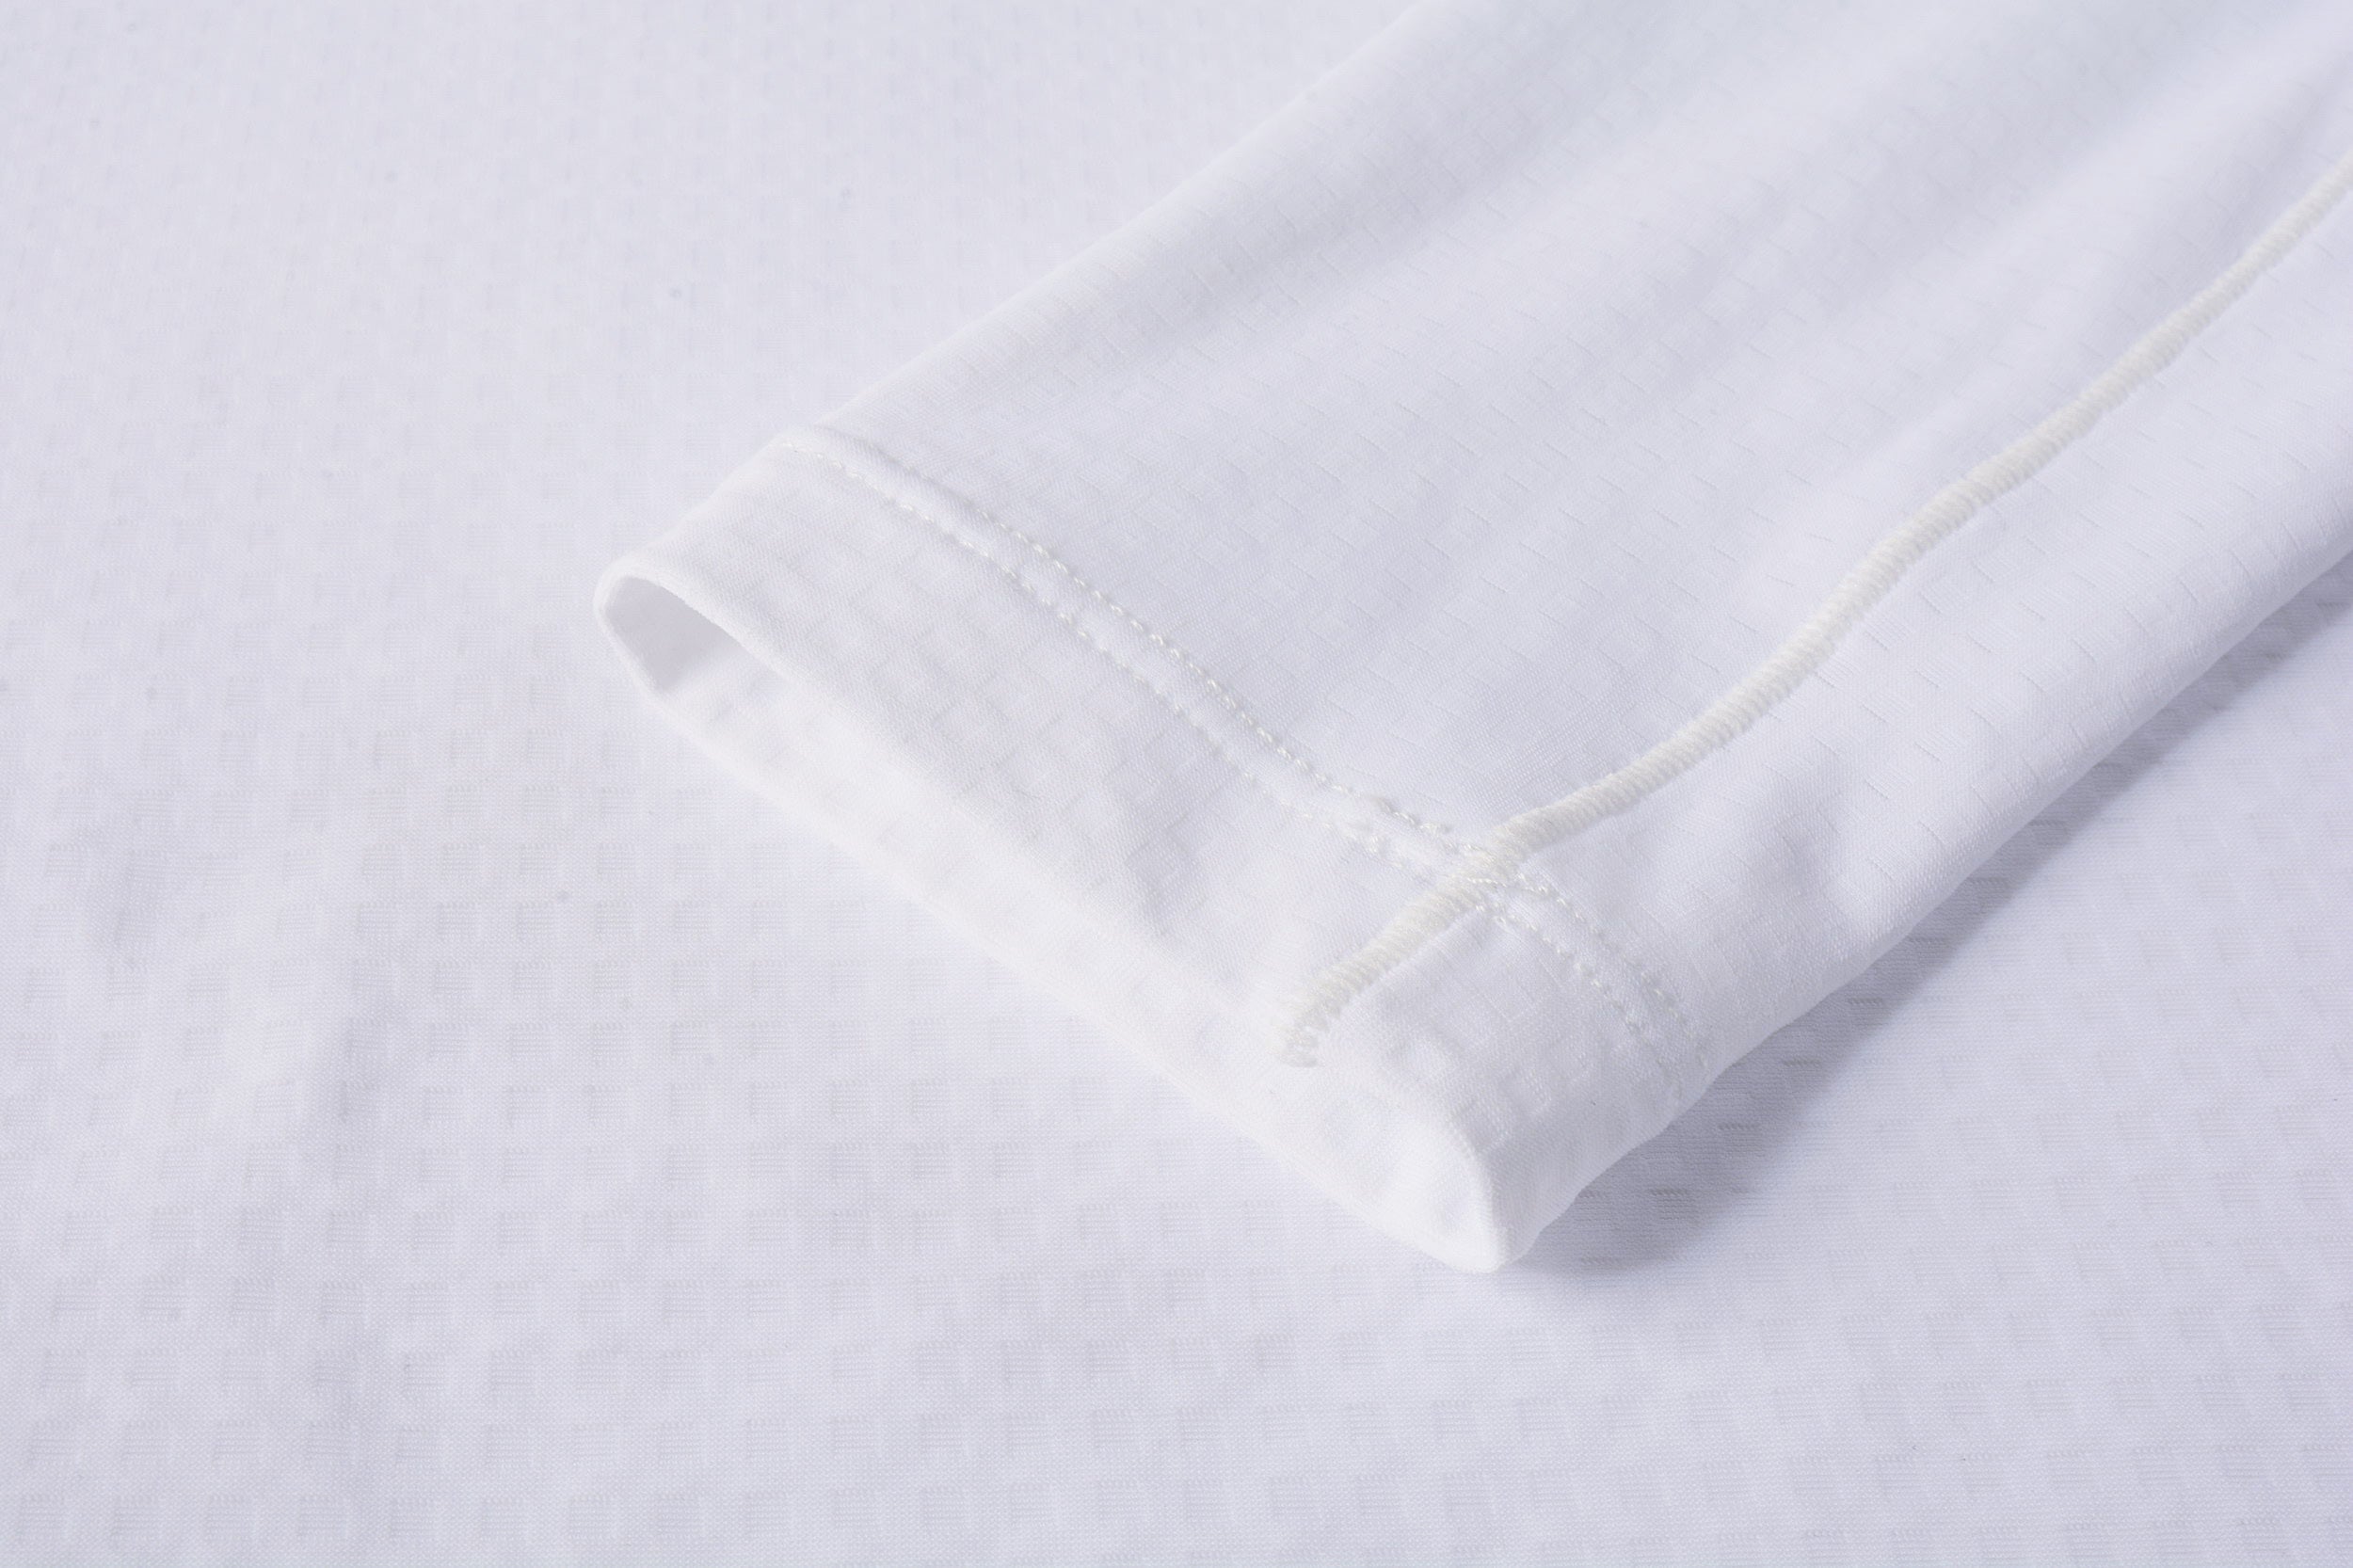 Women's Sleeved Base Layer - White